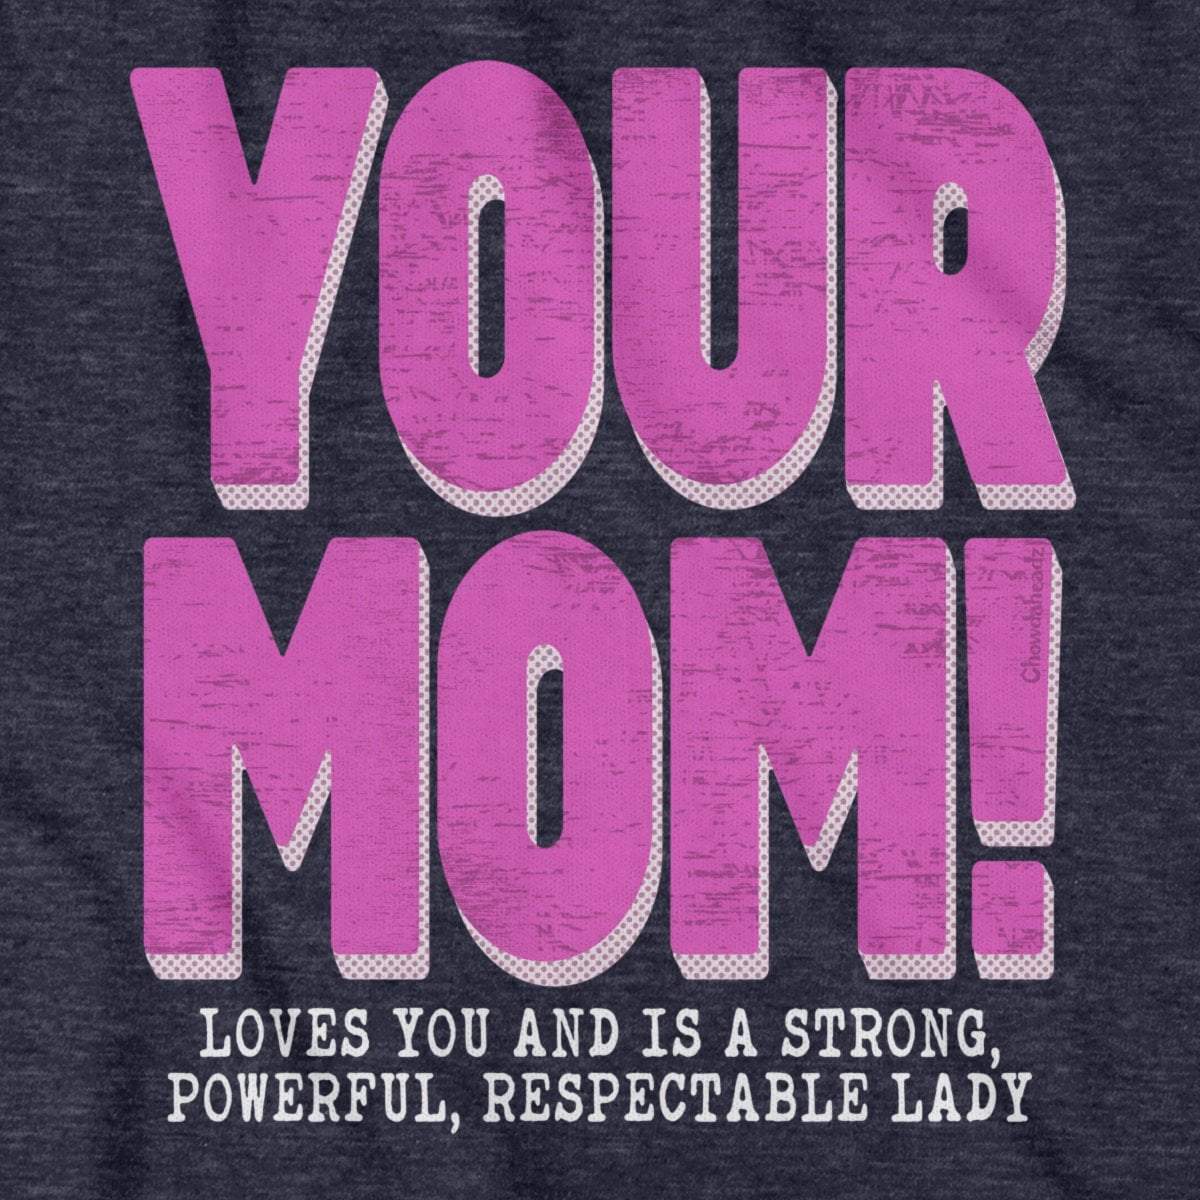 Your Mom T-Shirt - Chowdaheadz